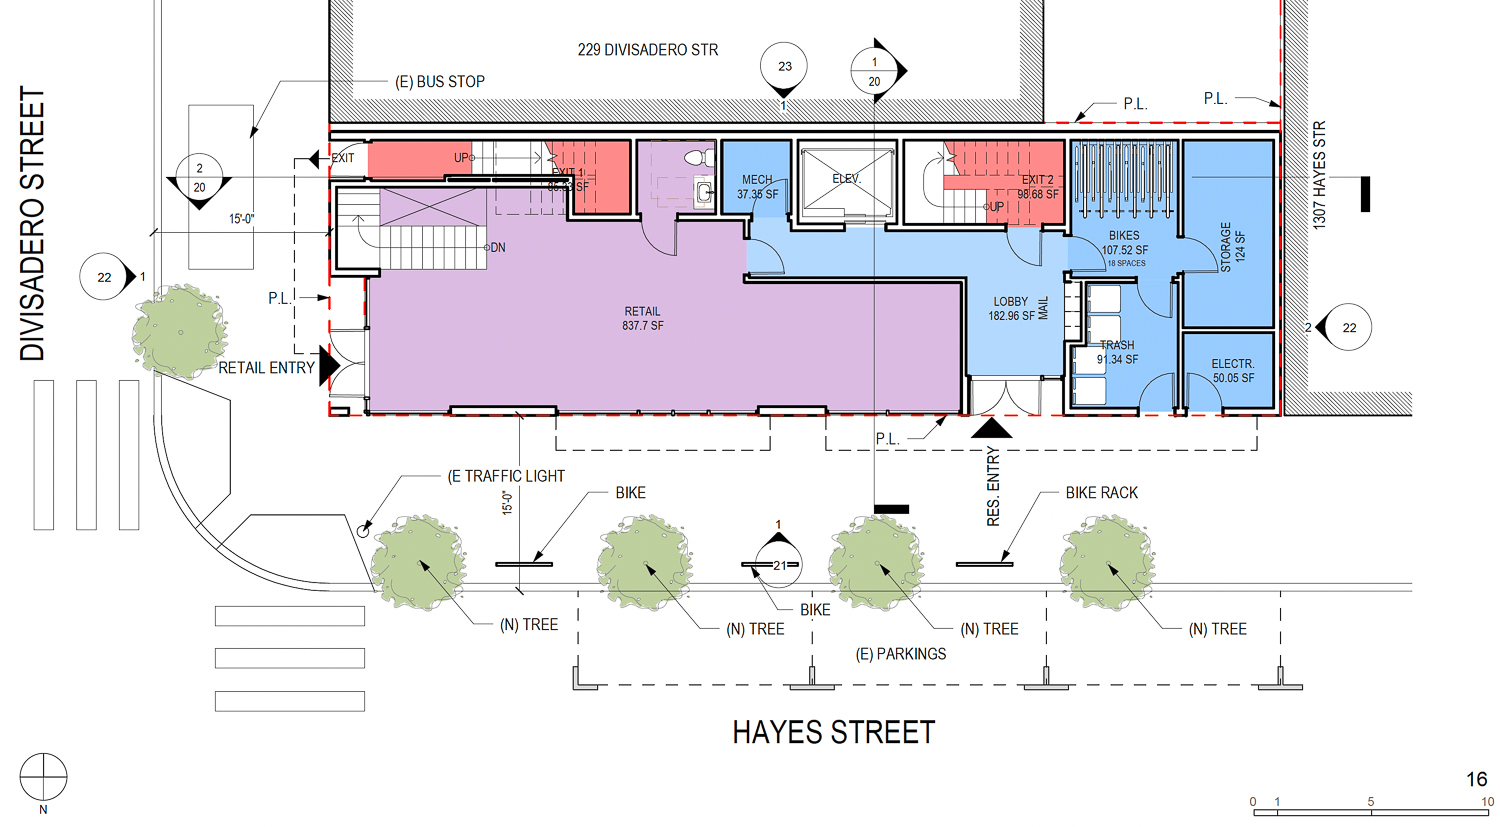 599 Divisadero Street ground-level floor plan, illustration by De Quesada Architects